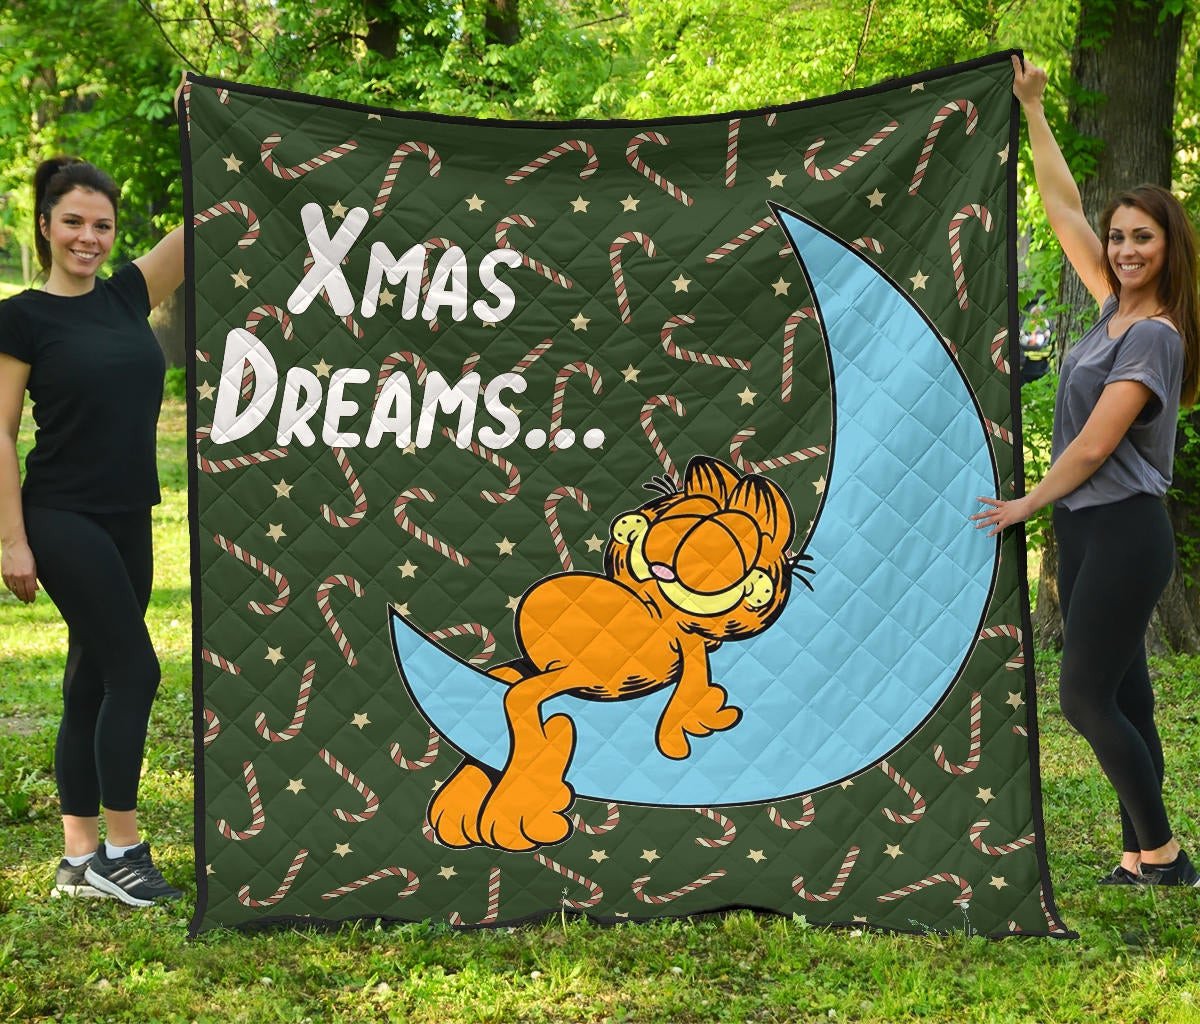 Xmas Dreams Garfield Sleeping On Moon Quilt Blanket